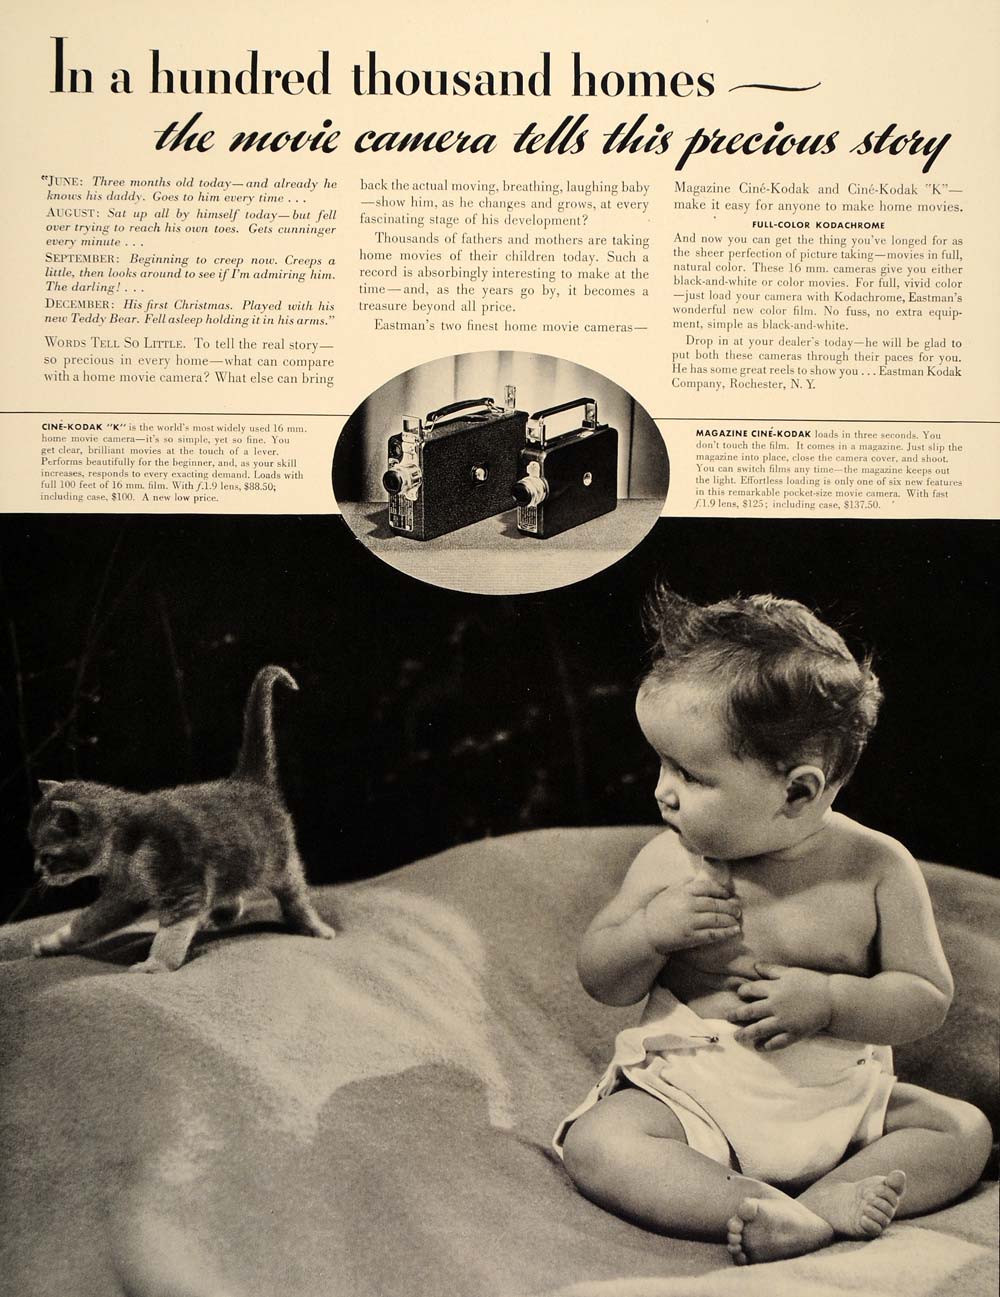 1937 Ad Cine Kodak "K" Home Movie Camera Baby Kitten - ORIGINAL ADVERTISING FT8